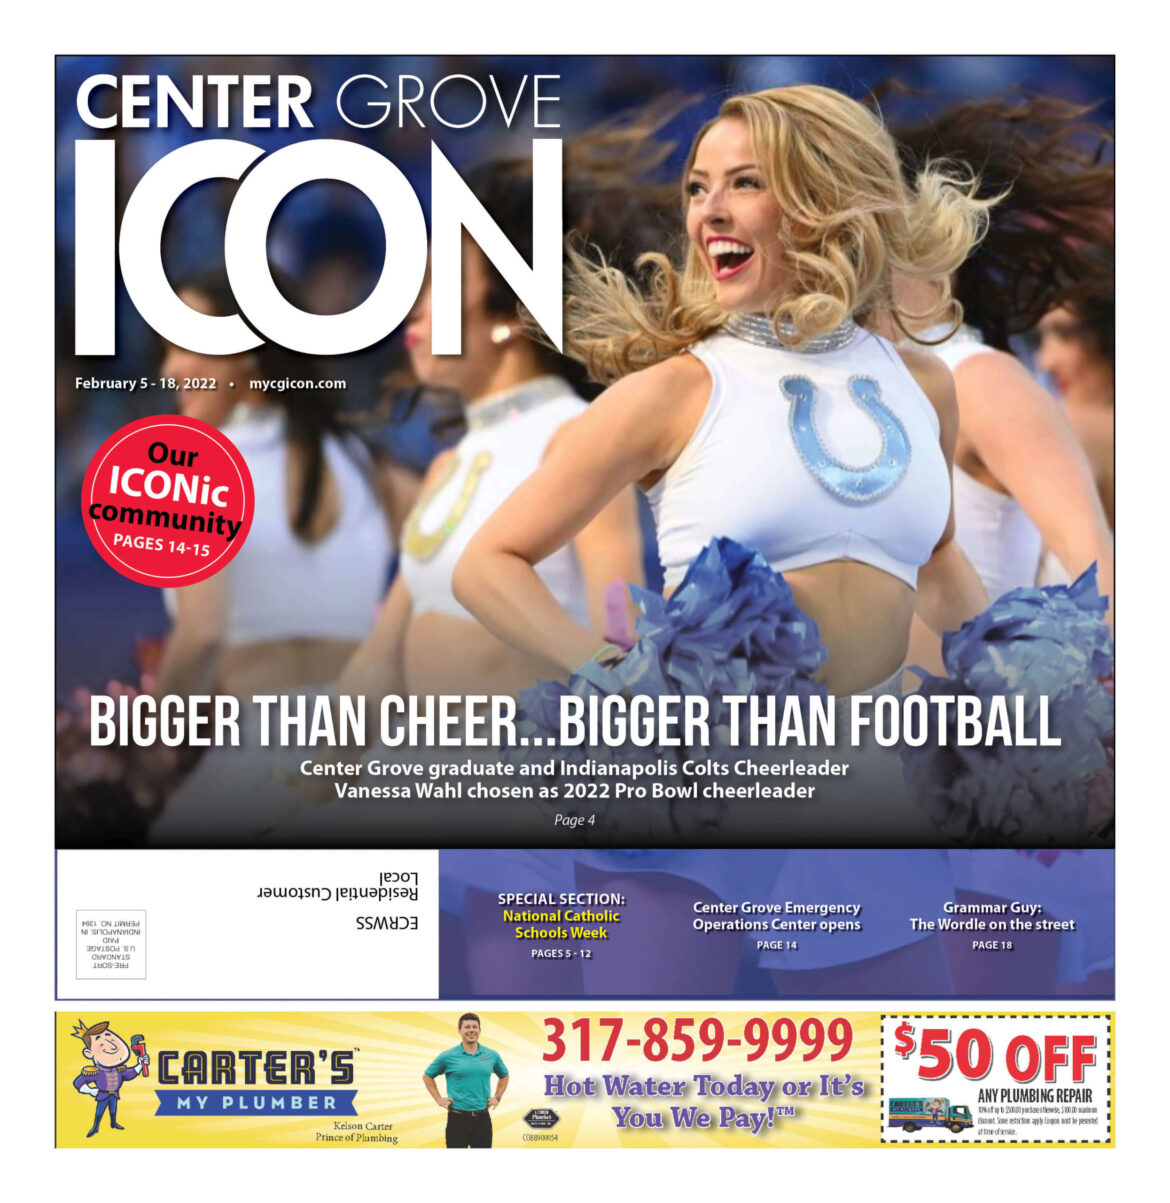 Center Grove ICON – February 5-18, 2022